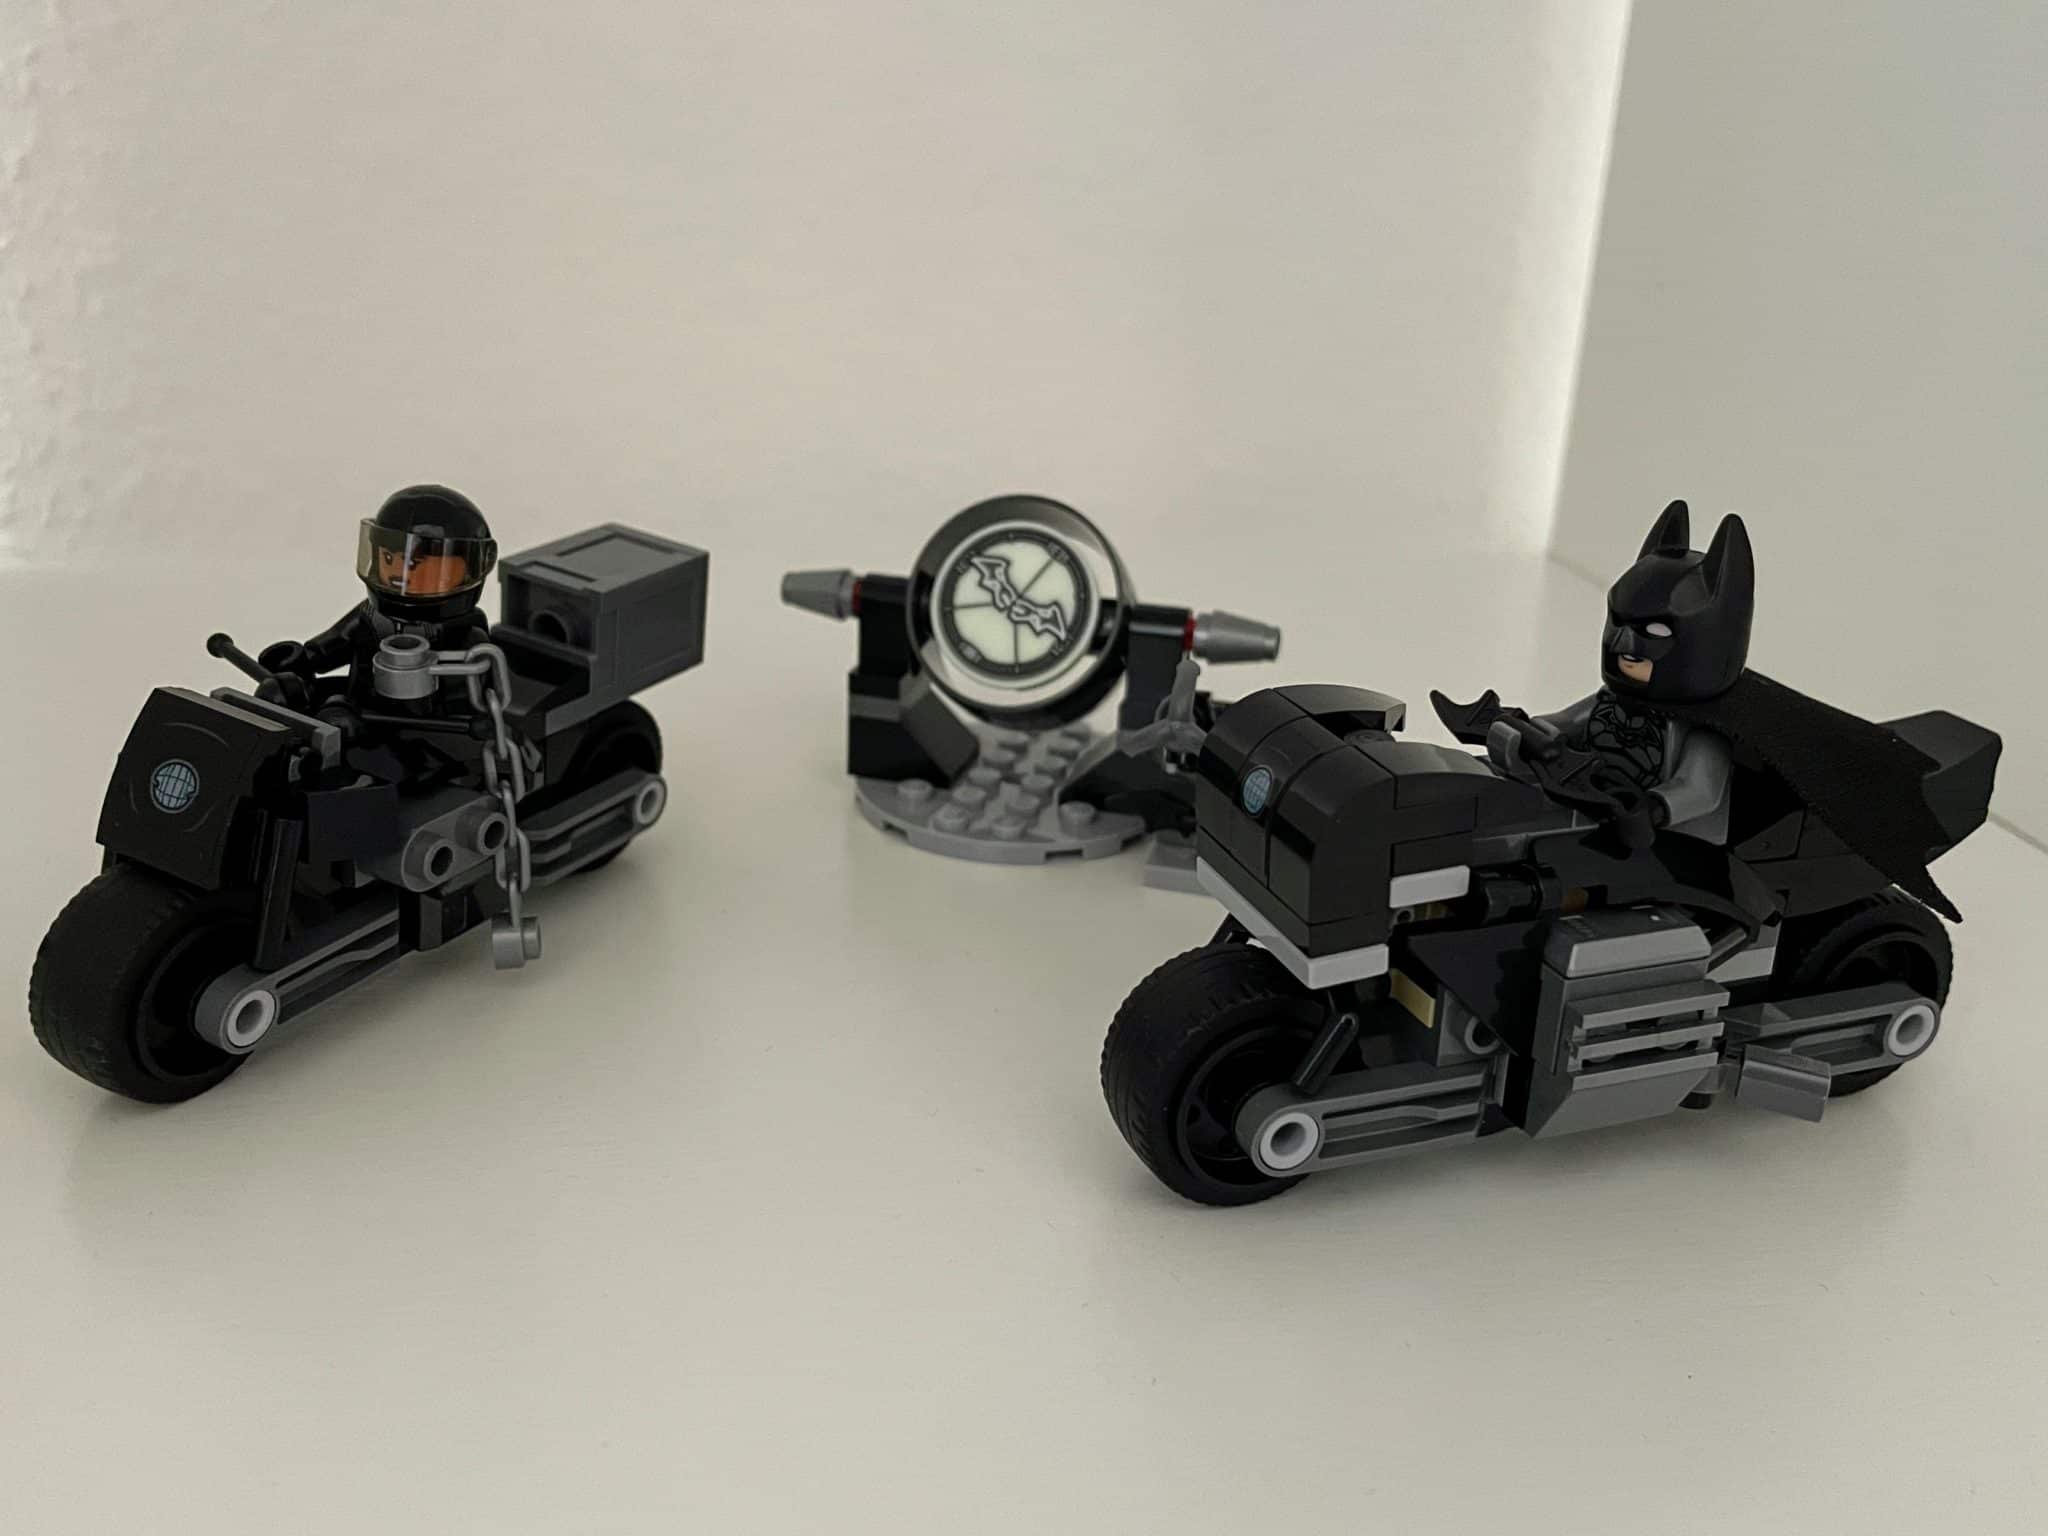 Batman™ & Selina Kyle™: Verfolgungsjagd auf dem Motorrad